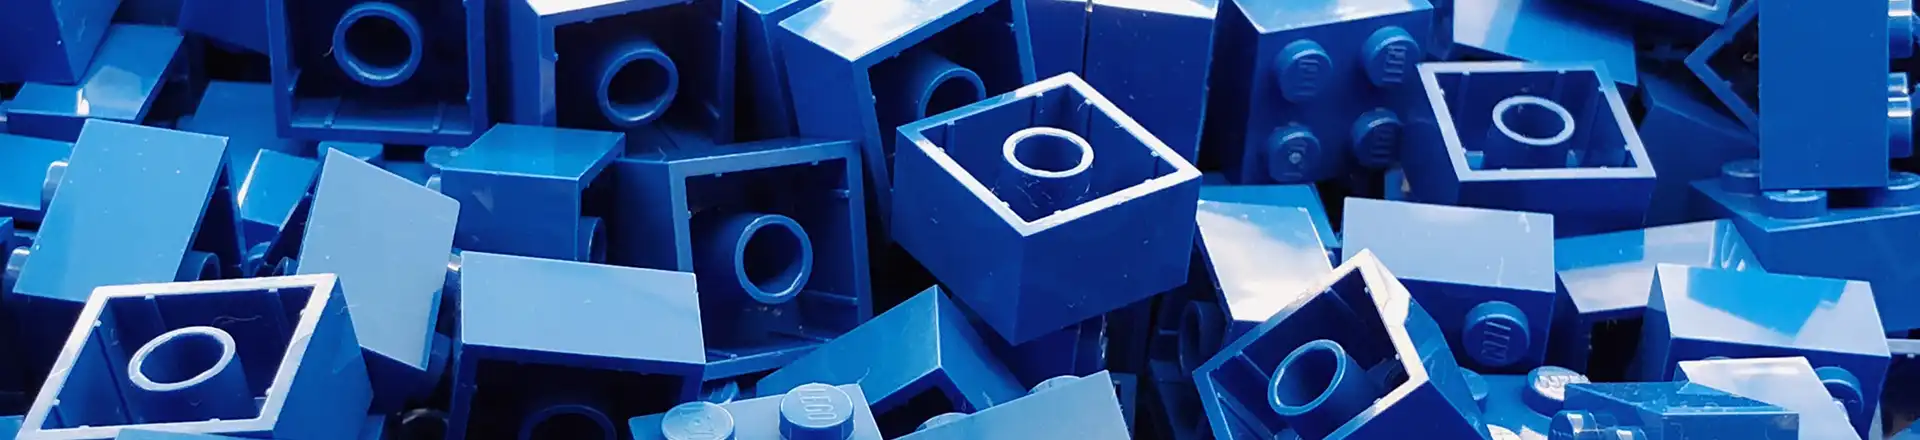 blue lego bricks